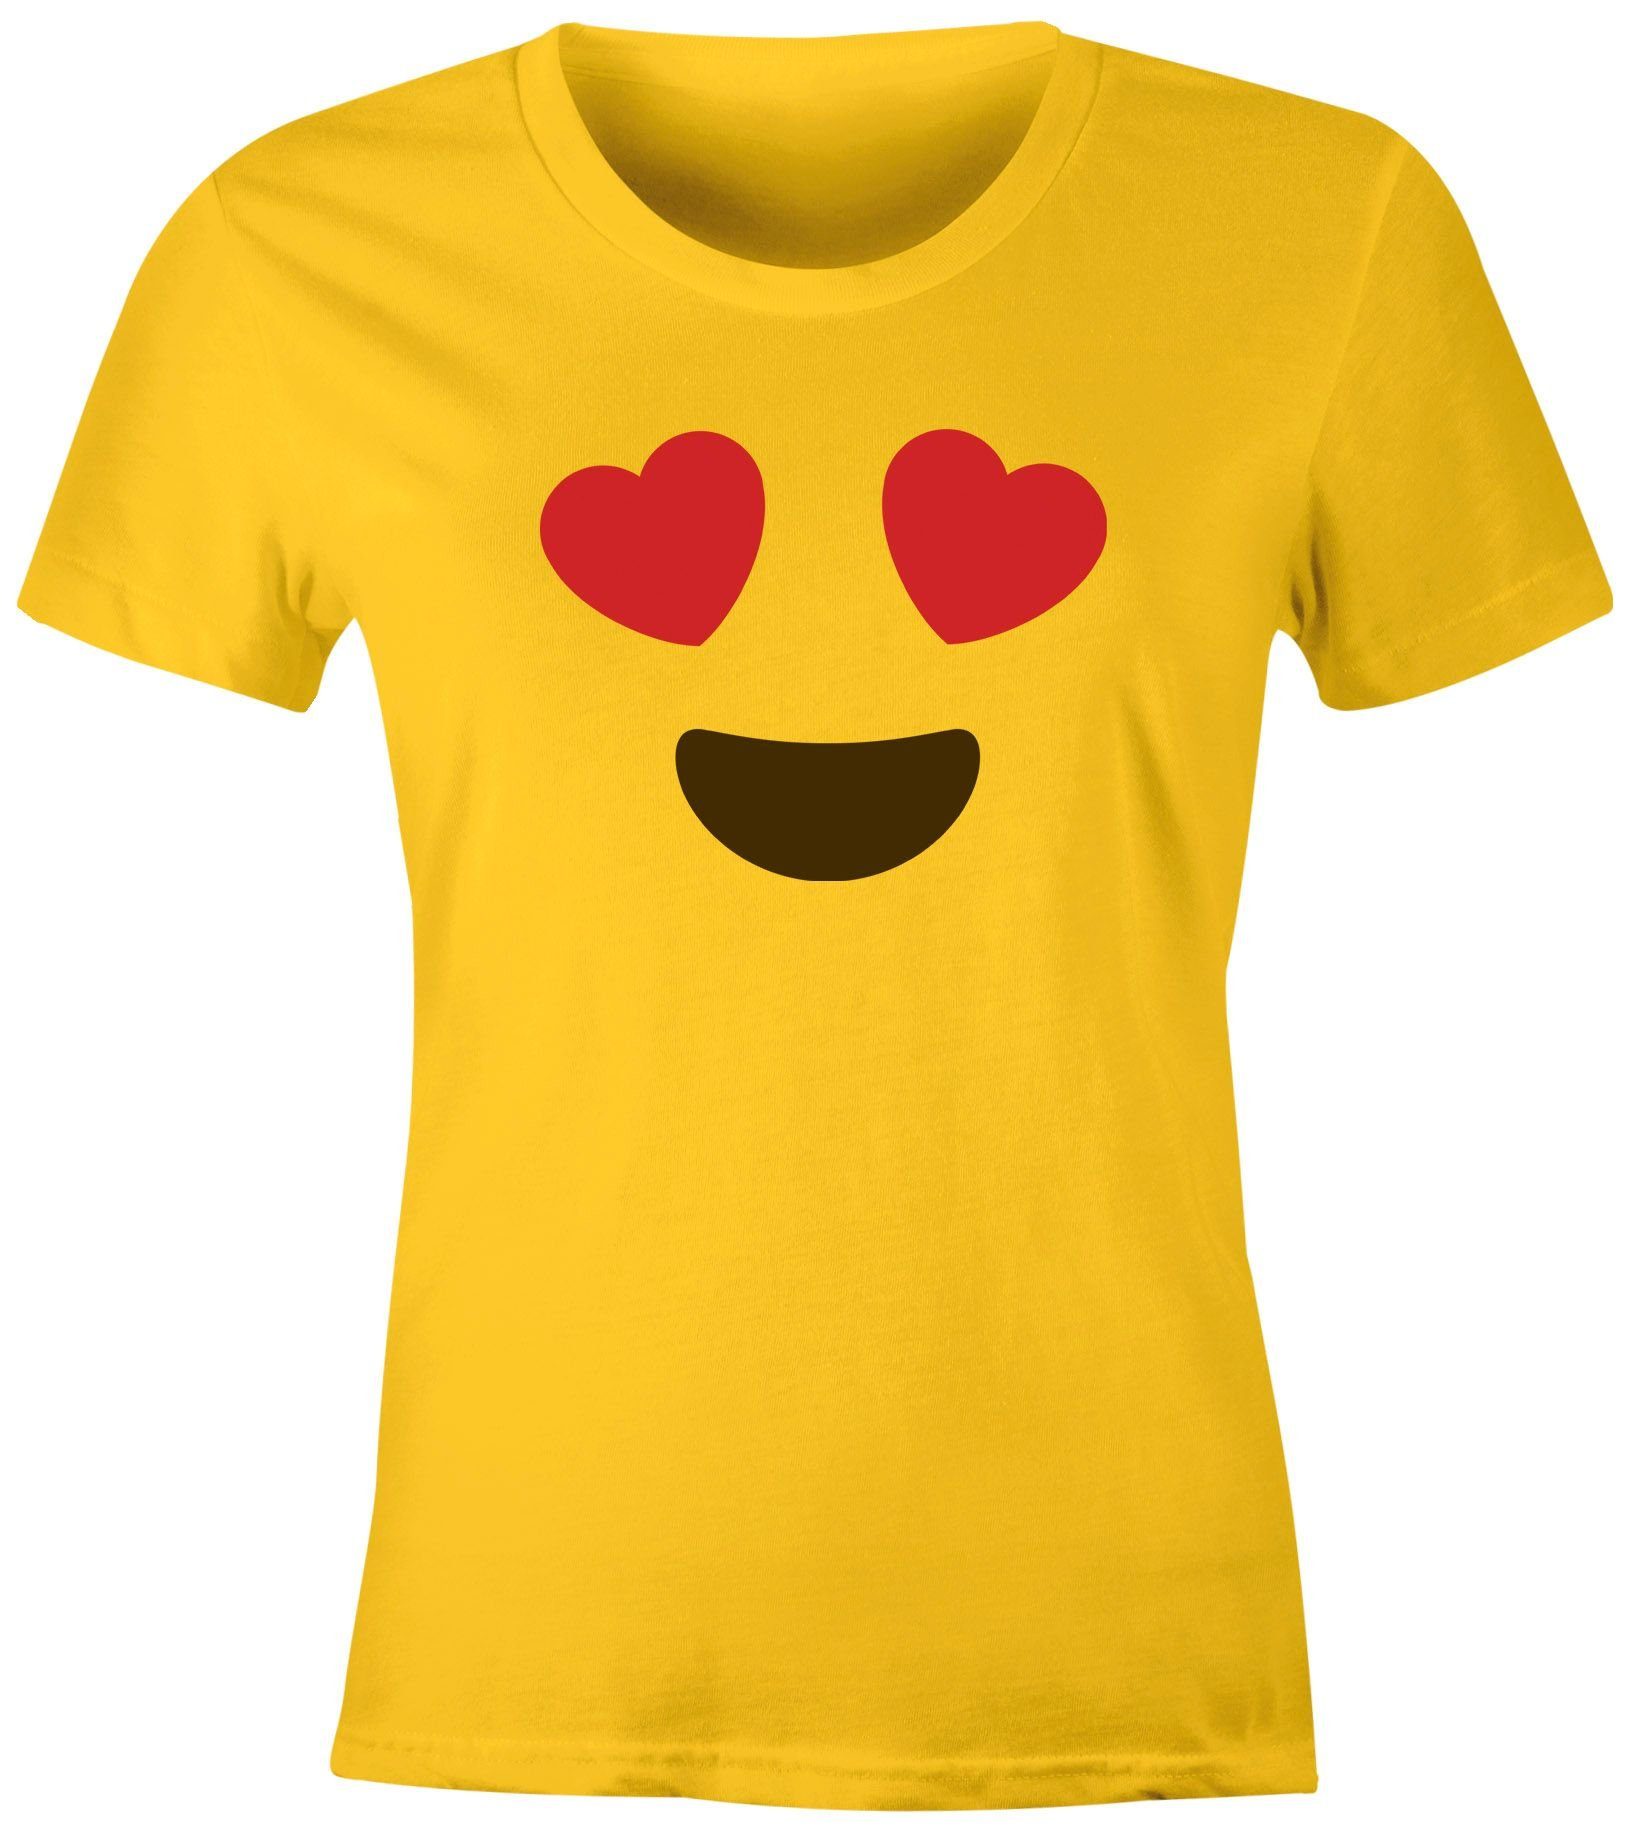 MoonWorks Print-Shirt Damen T-Shirt Emoticon Gruppenkostüm Fasching Karneval Junggesellenabschied JGA lustig Fun-Shirt Moonworks® mit Print Herzaugen gelb